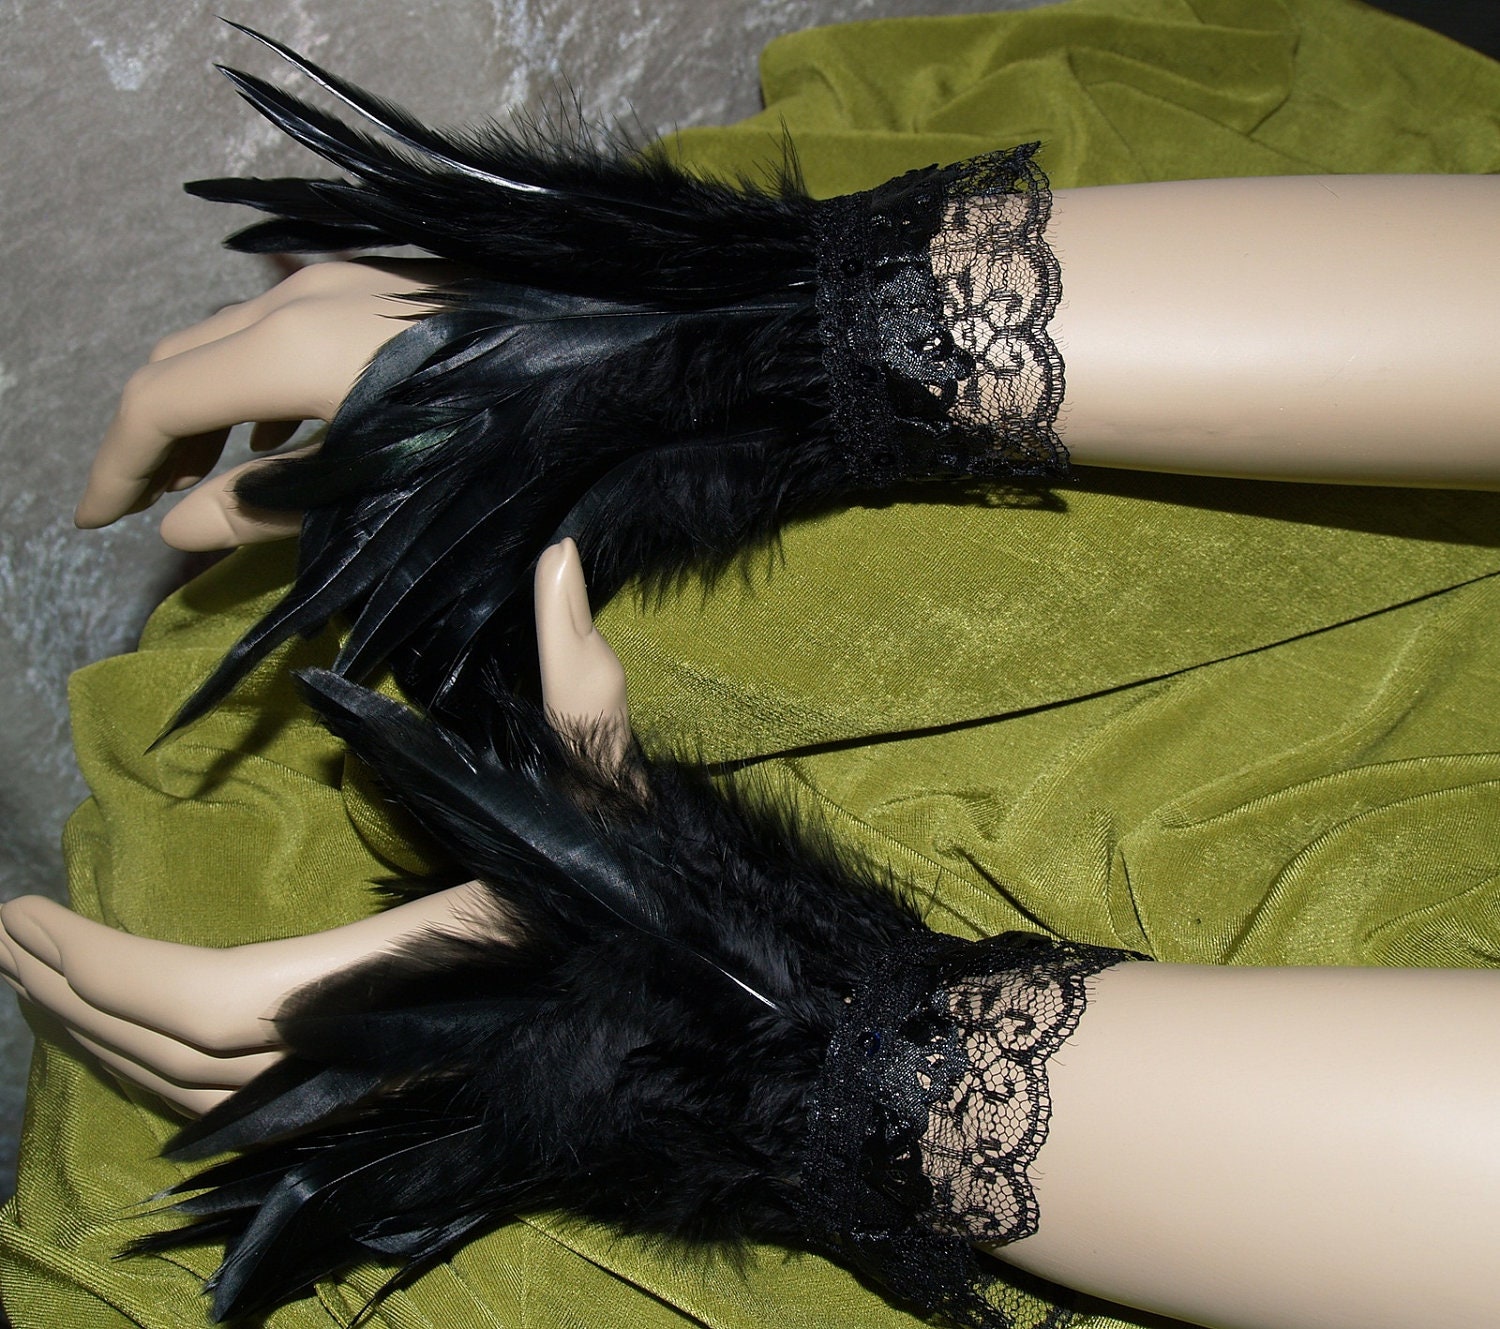 Pair of Black Iridescent Feather Wrist Cuffs